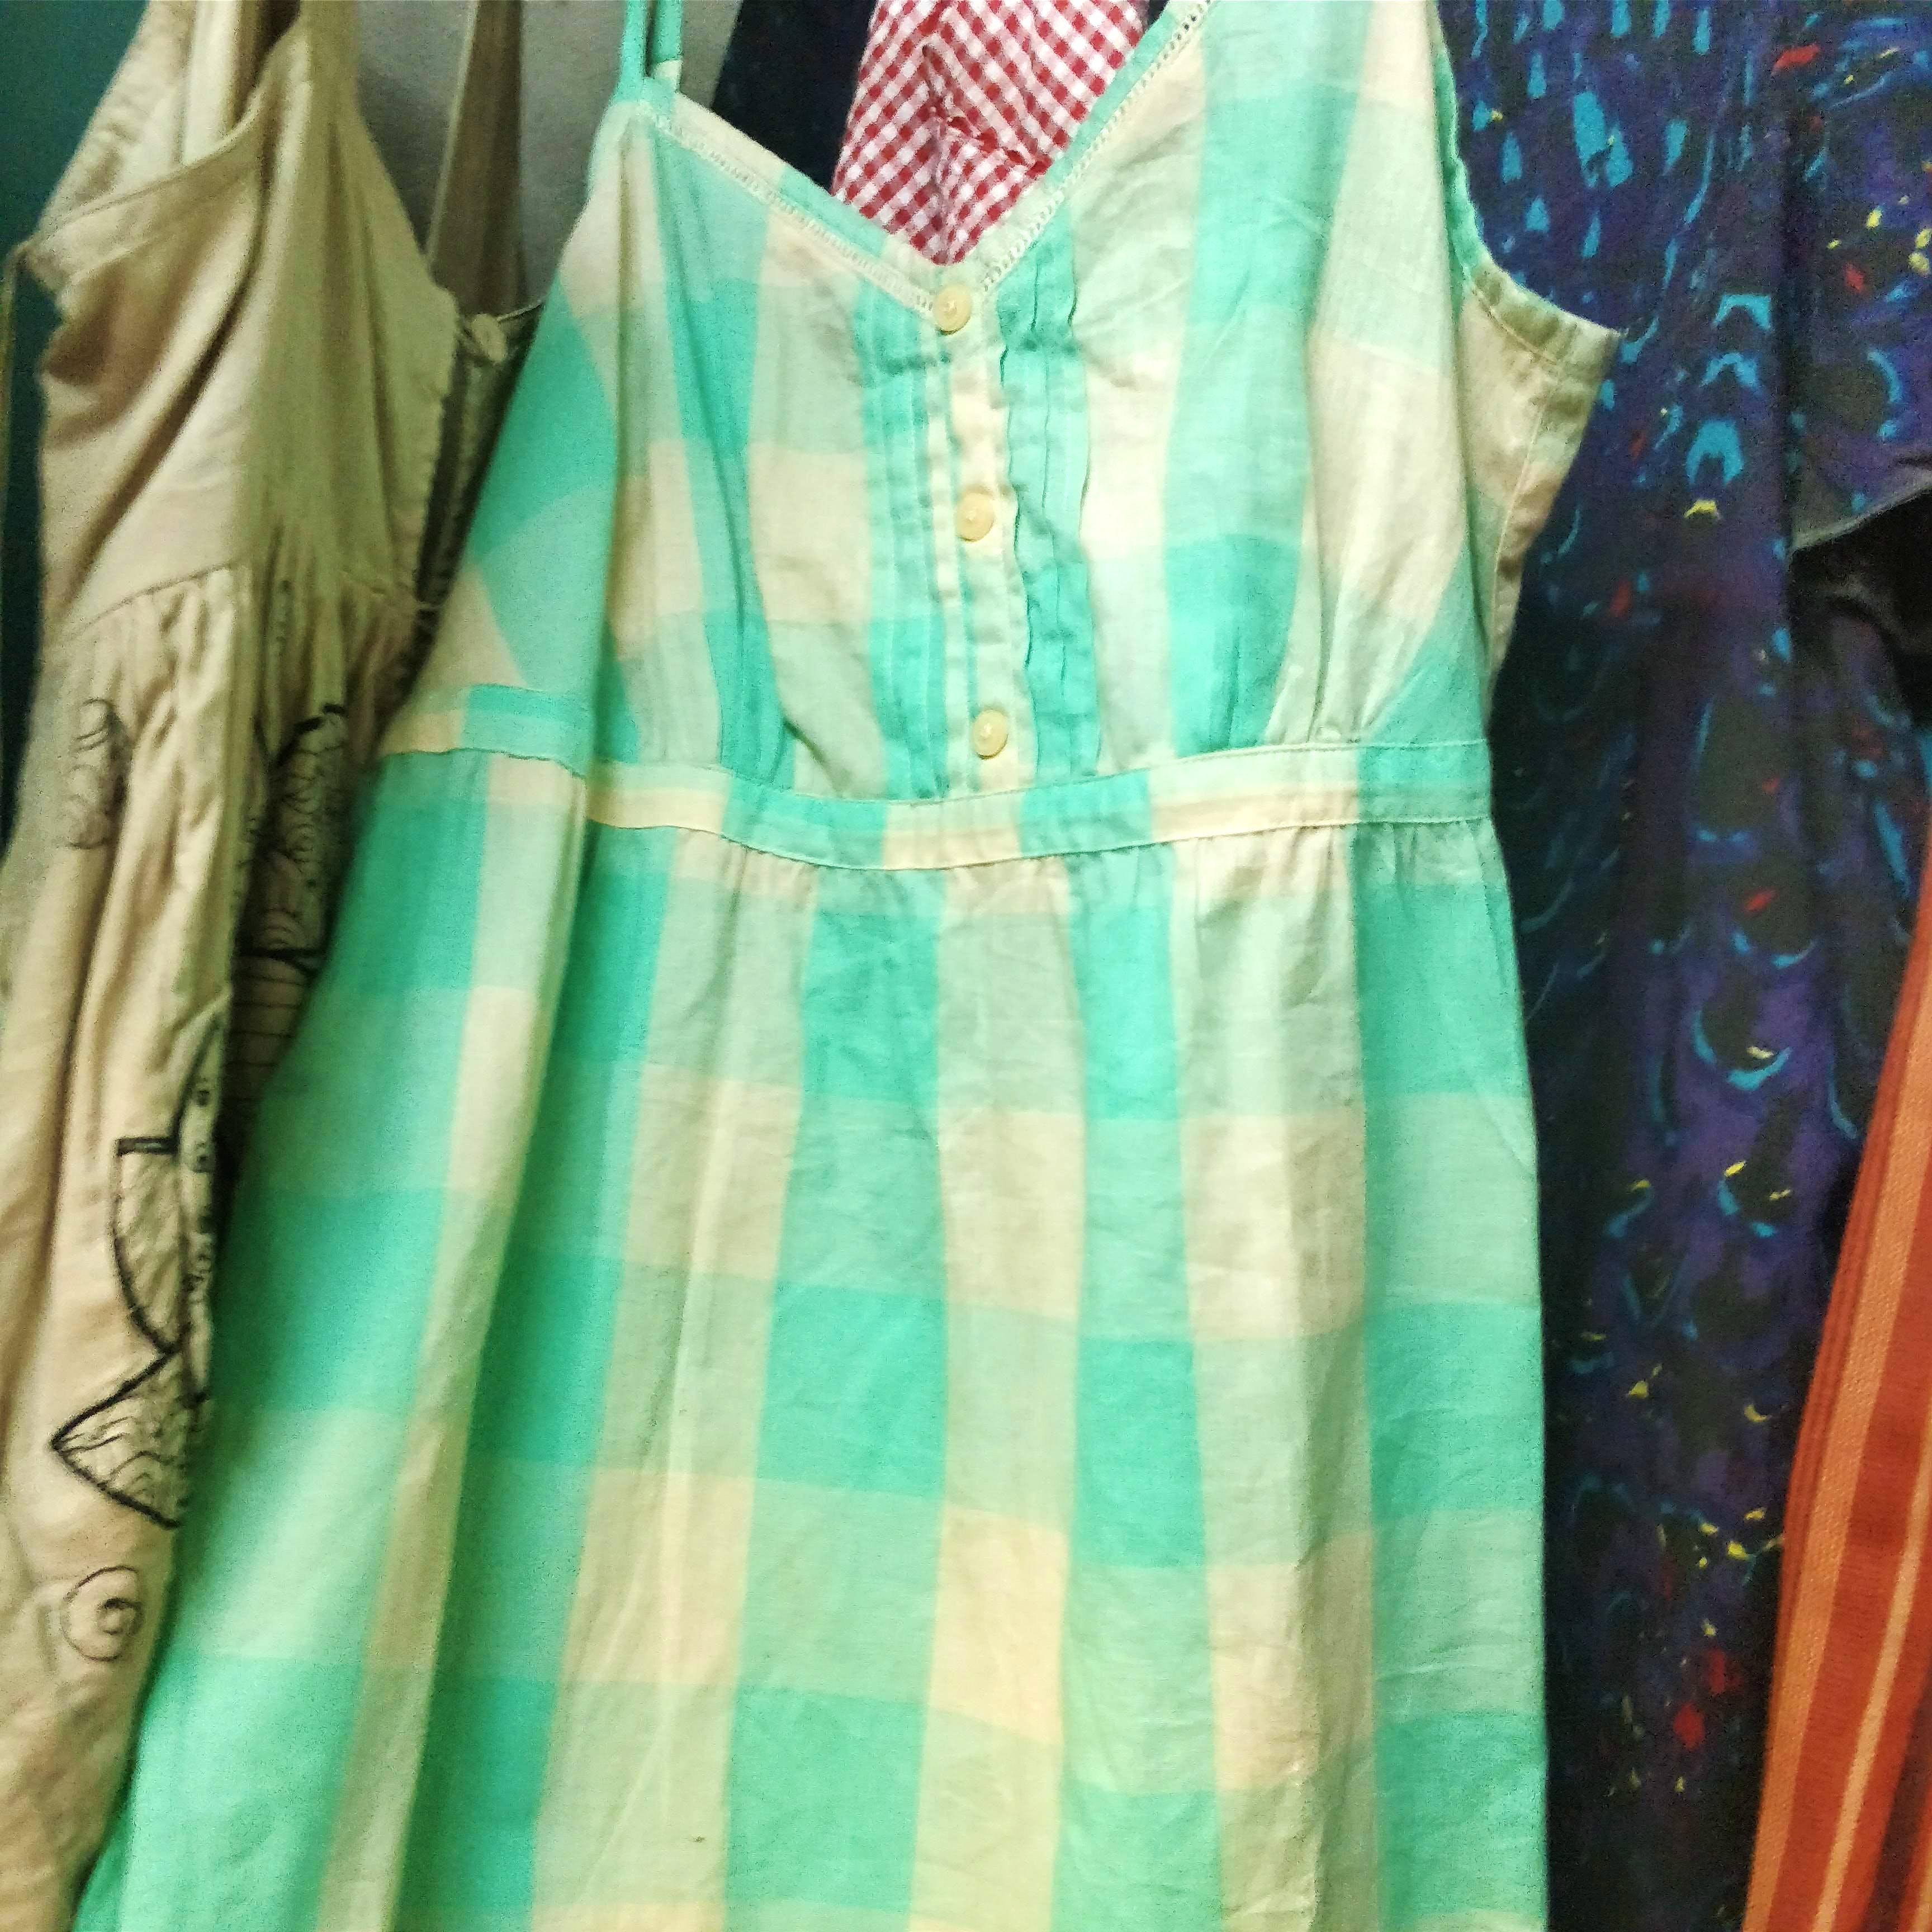 Clothing,Day dress,Dress,Green,Aqua,Blue,Turquoise,One-piece garment,Pattern,Textile